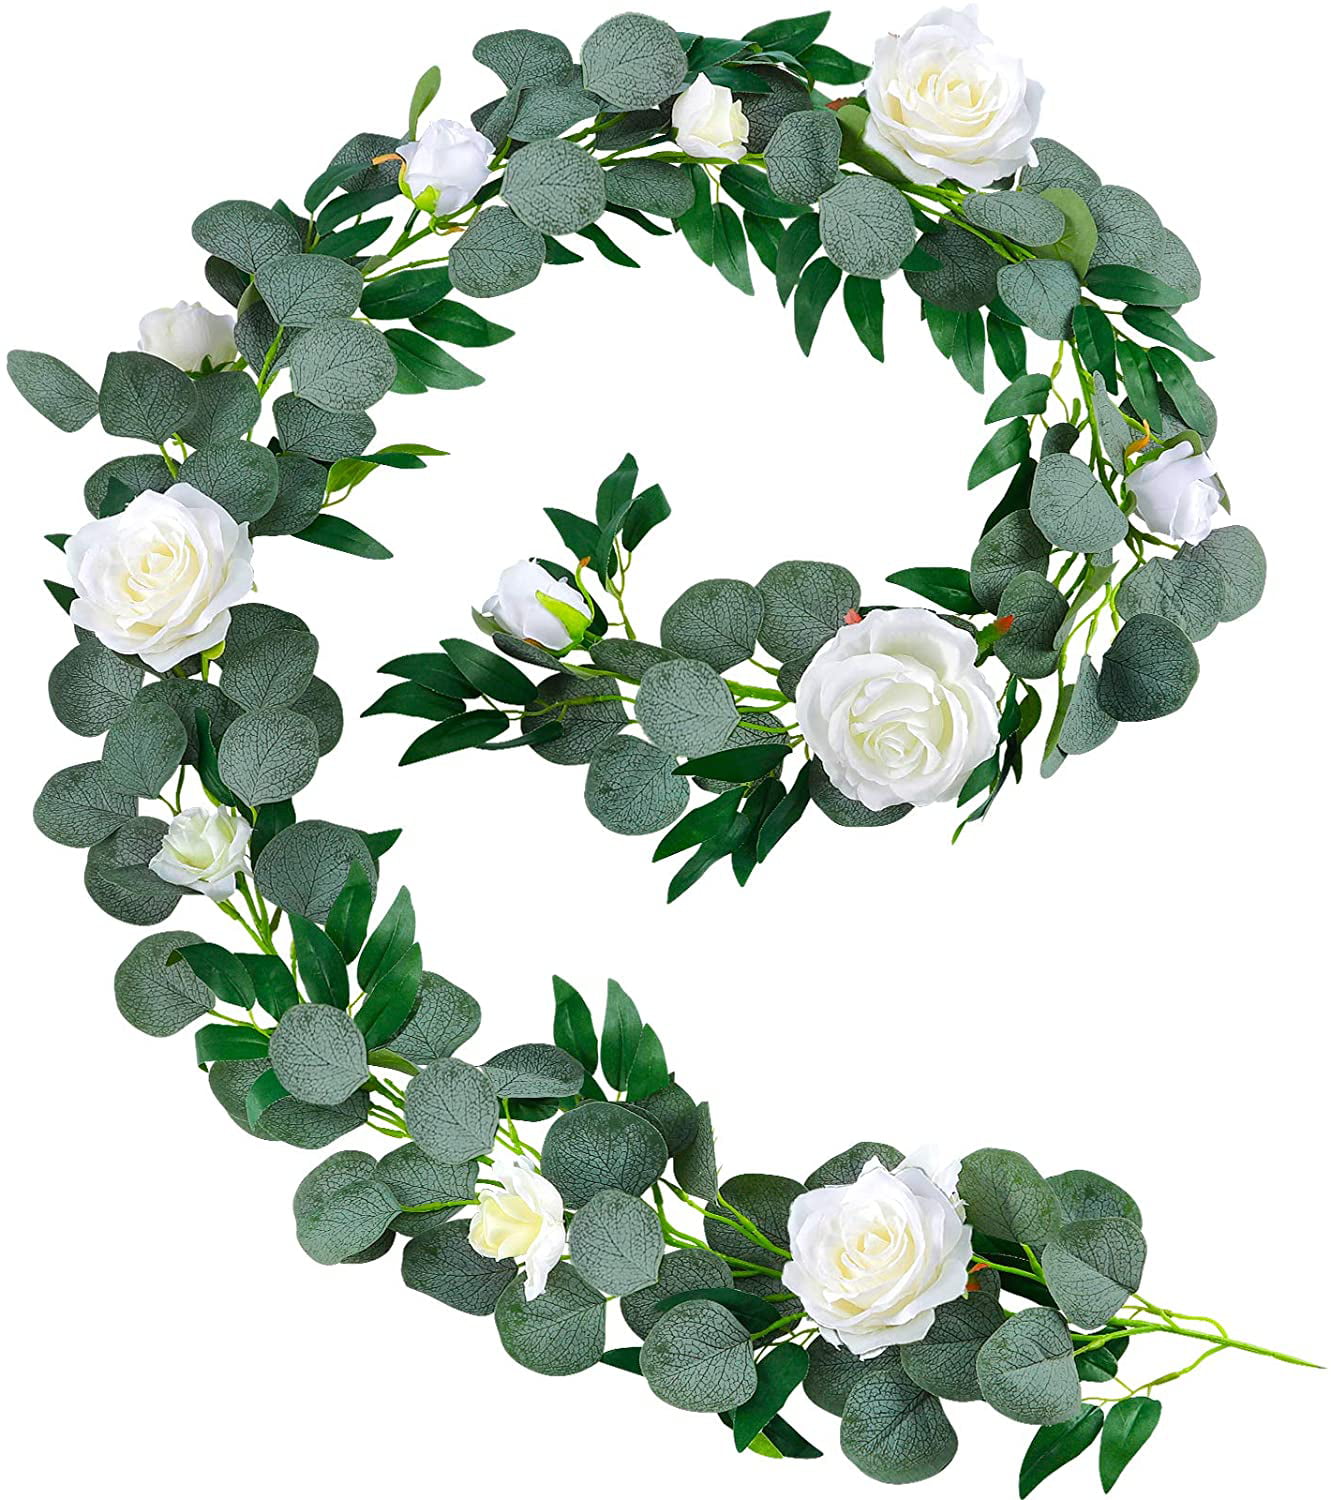 Decorative White Rose Flower Artificial Foliage Garland 